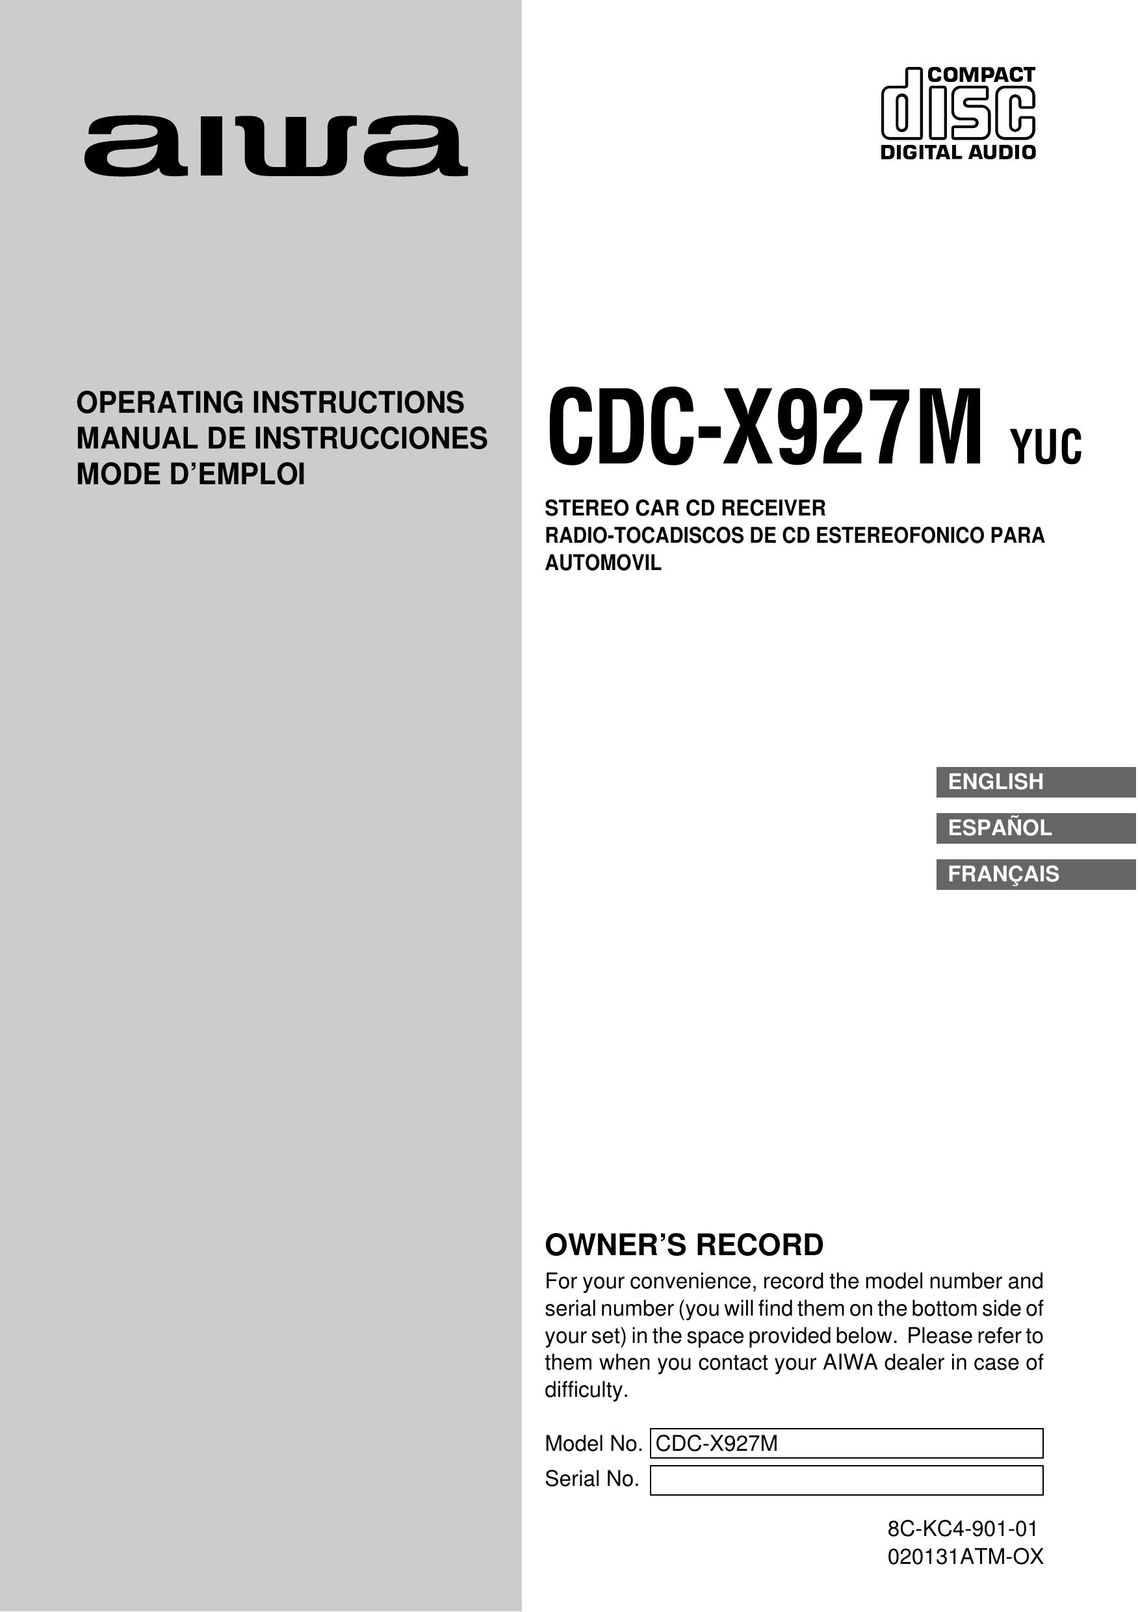 Aiwa CDC-X927M YUC Car Stereo System User Manual (Page 1)